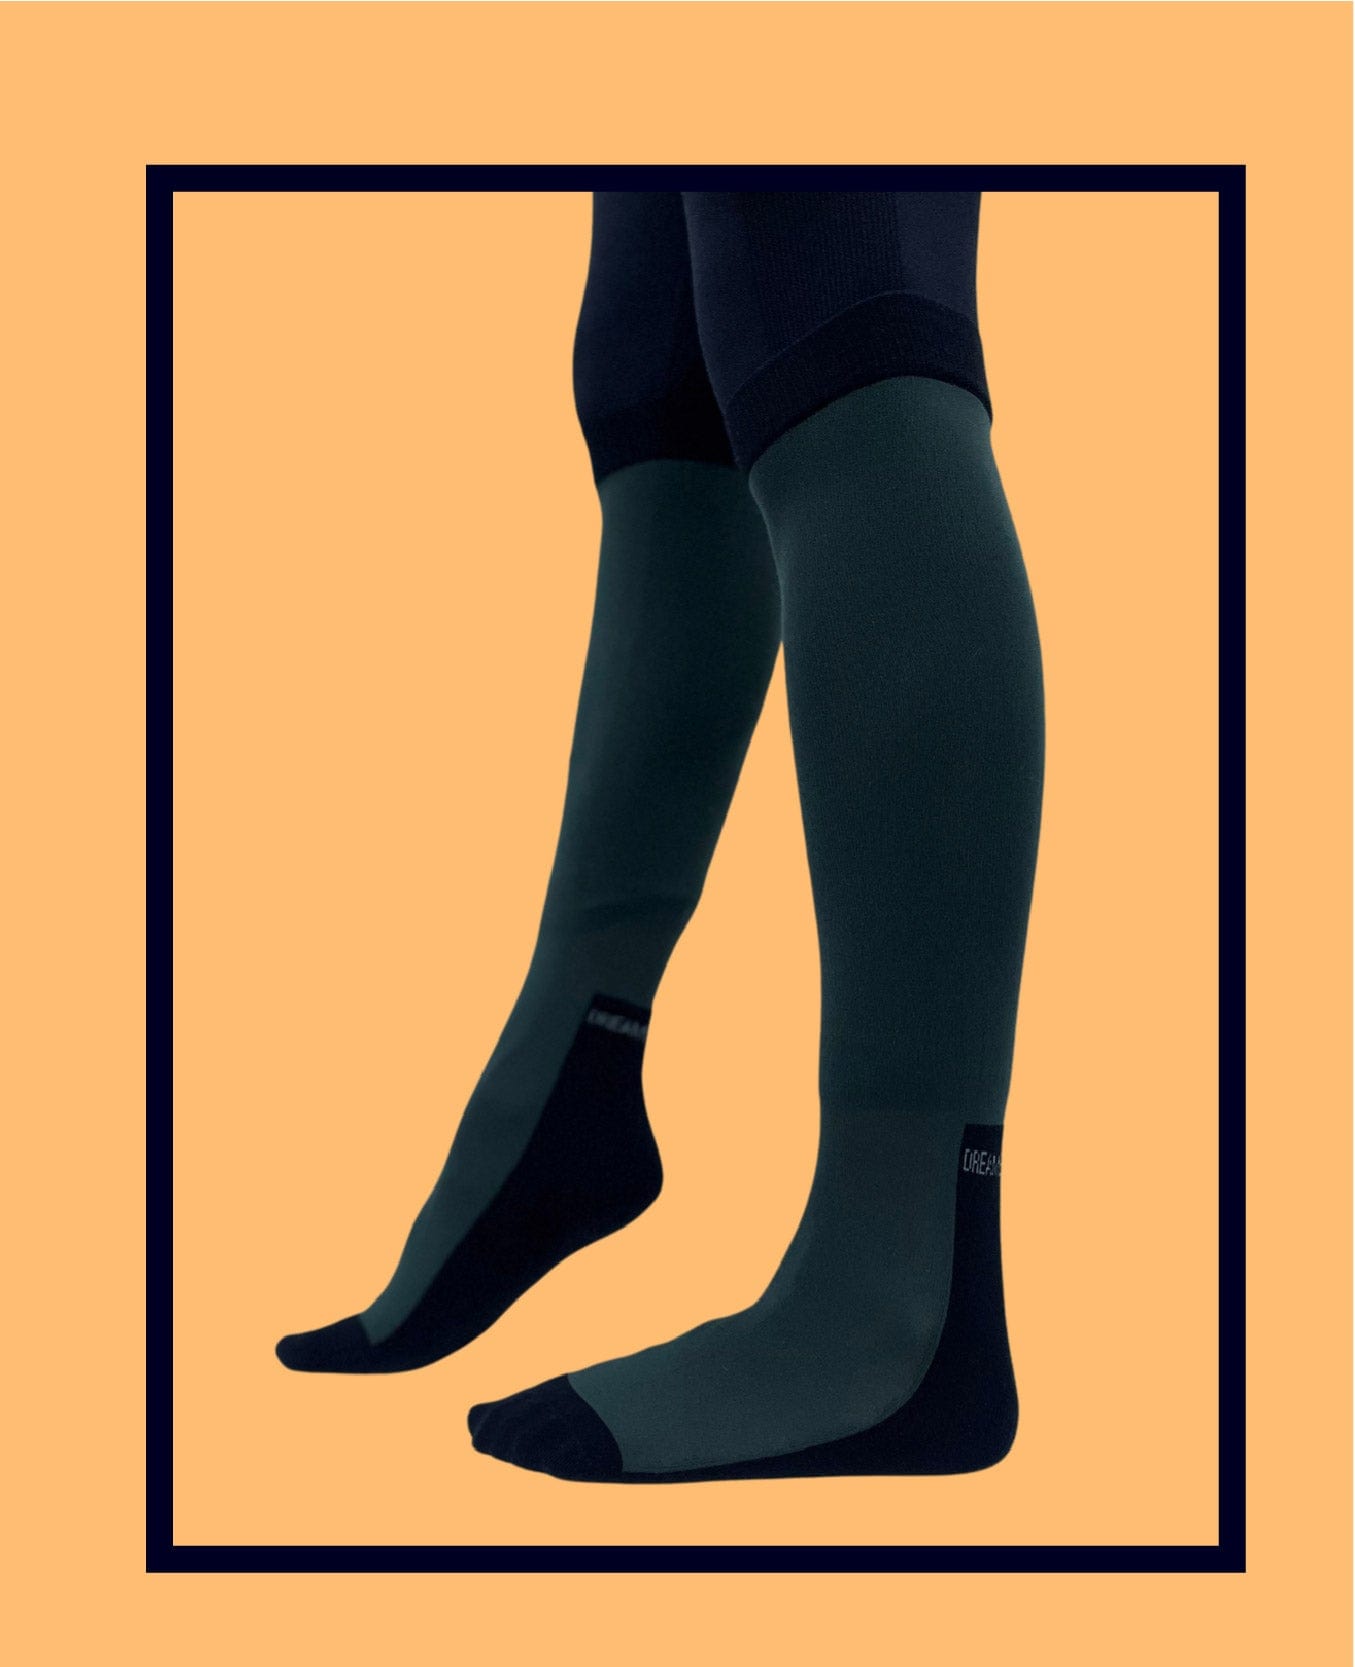 Personalised Men's Walking Boot Socks 